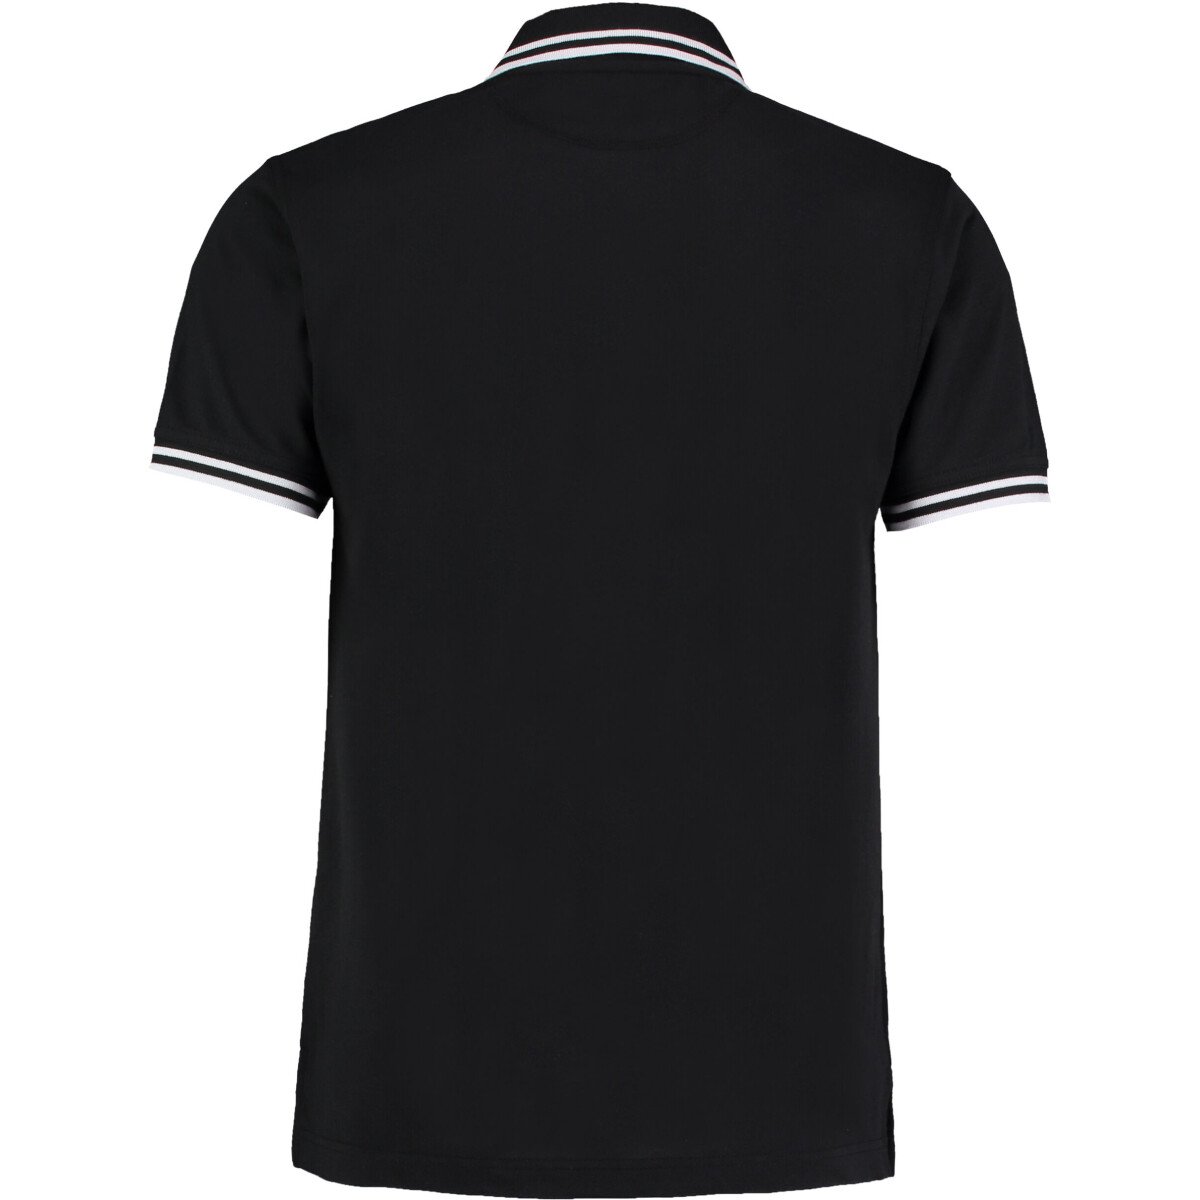 Kustom Kit KK409 Classic Fit Tipped Collar Polo Shirt - Black/White ...